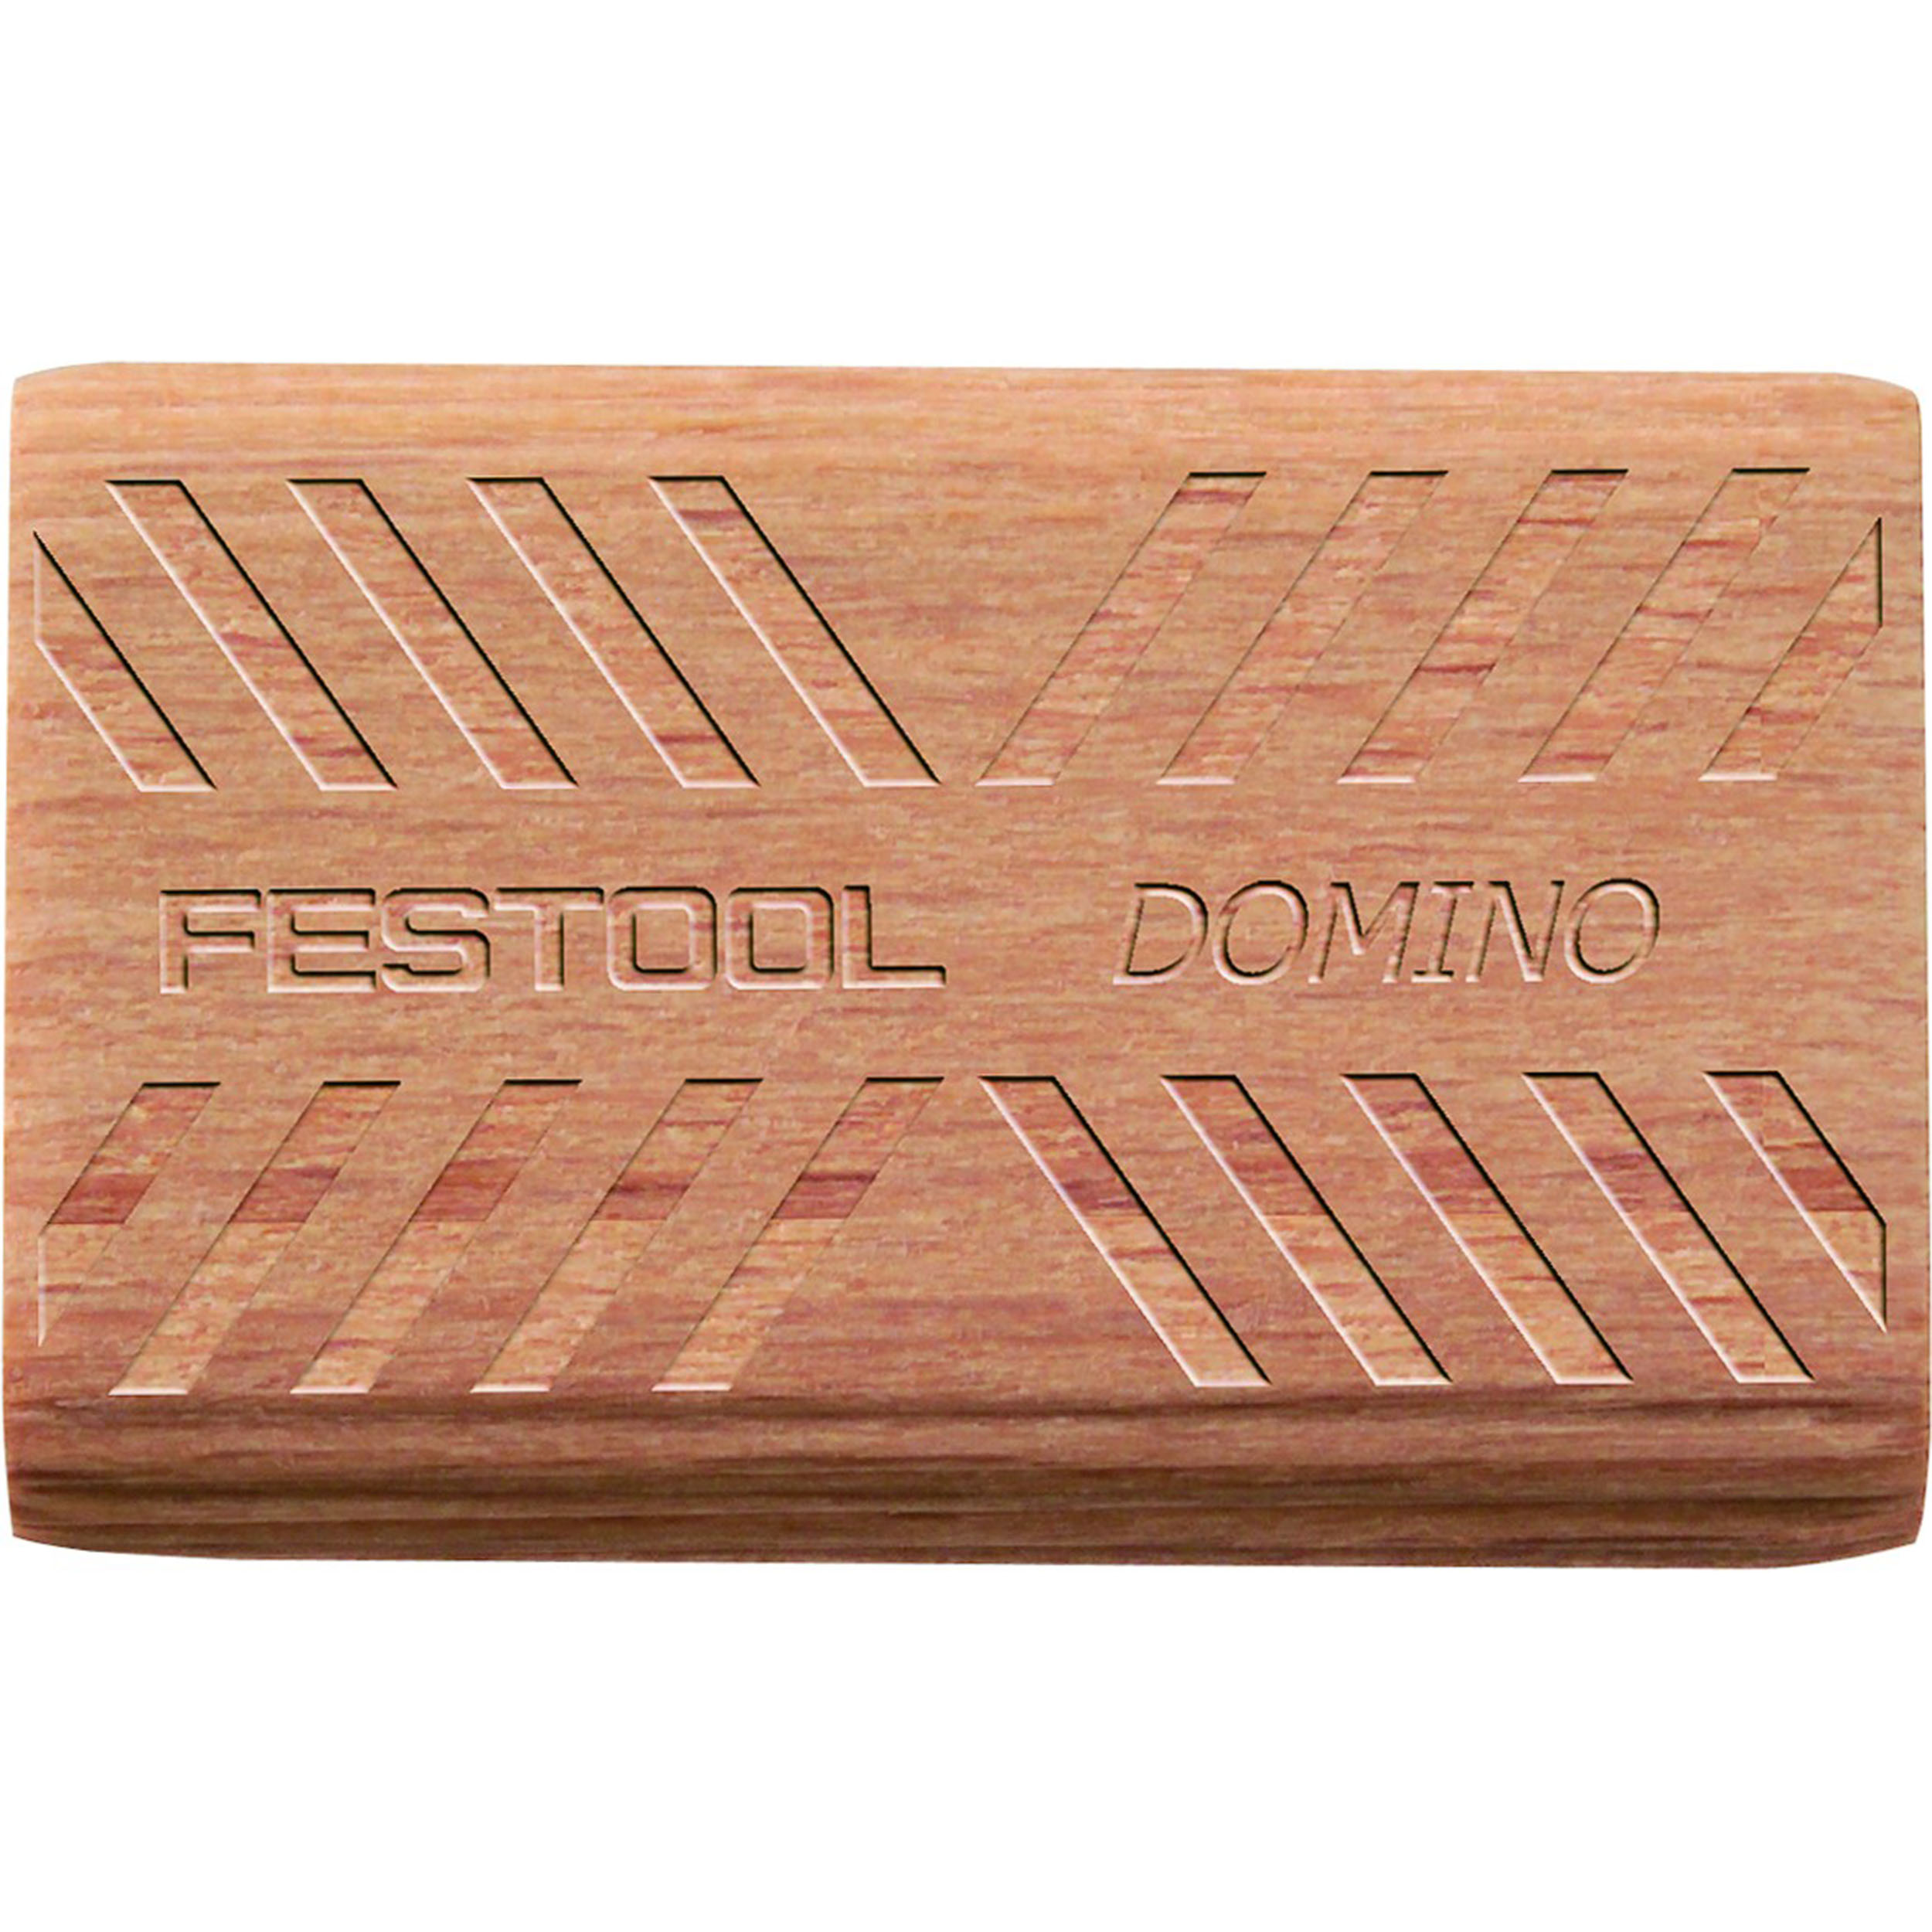 Festool Dominos, 5mm X 30mm, 1800 Pieces